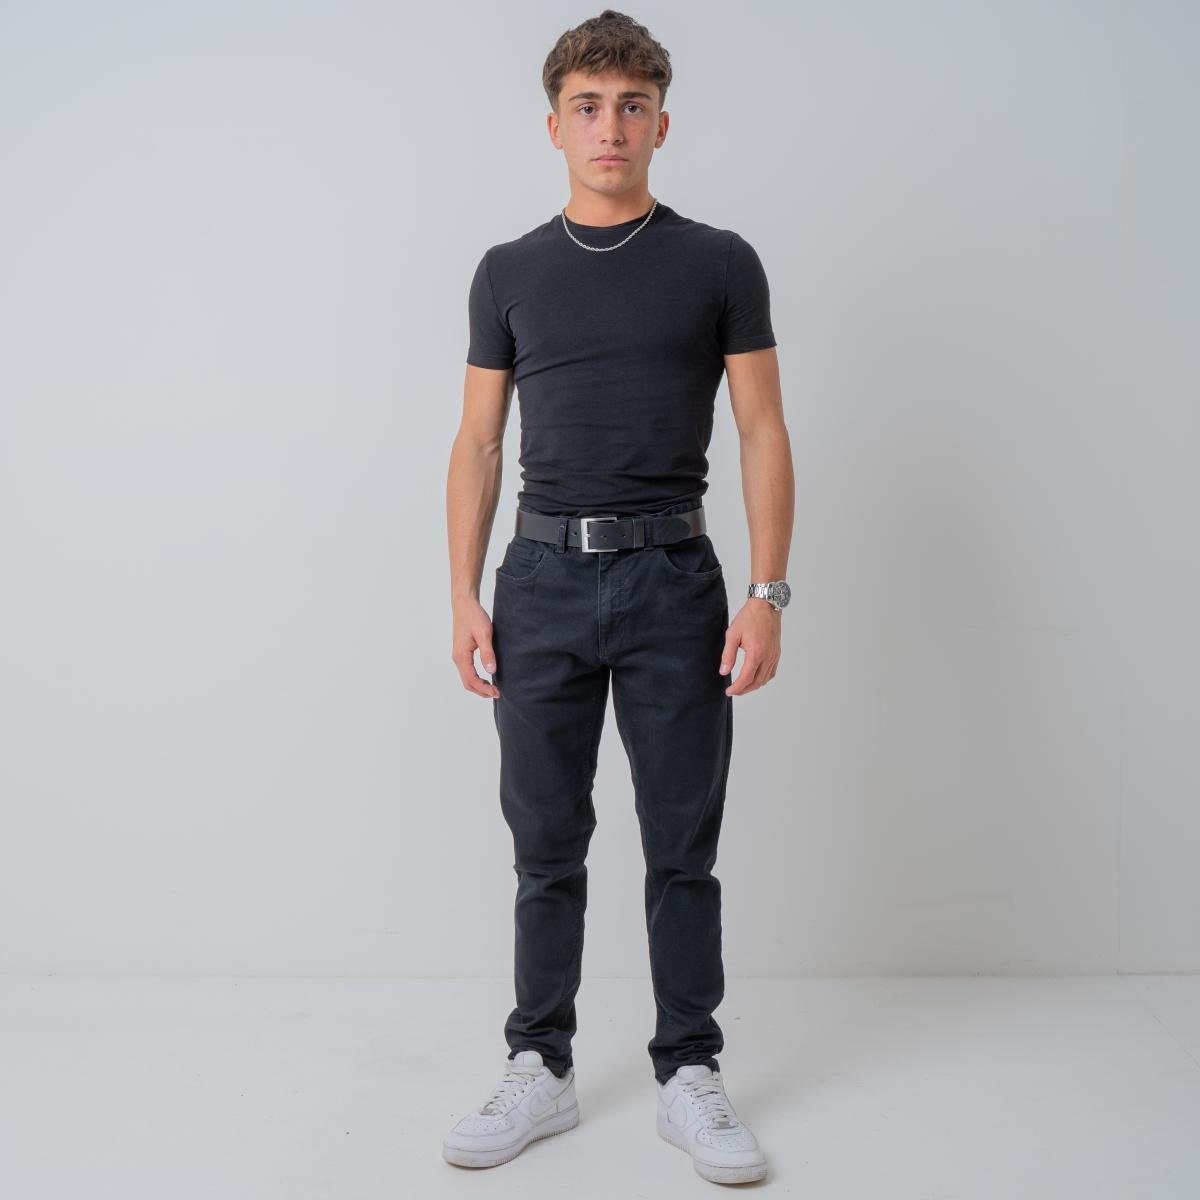 BELTINGER Leder-Gürtel Ledergürtel Jeans-Gürtel für aus cm He Schwarz, 4 Hochwertiger Vollrindleder Silber -